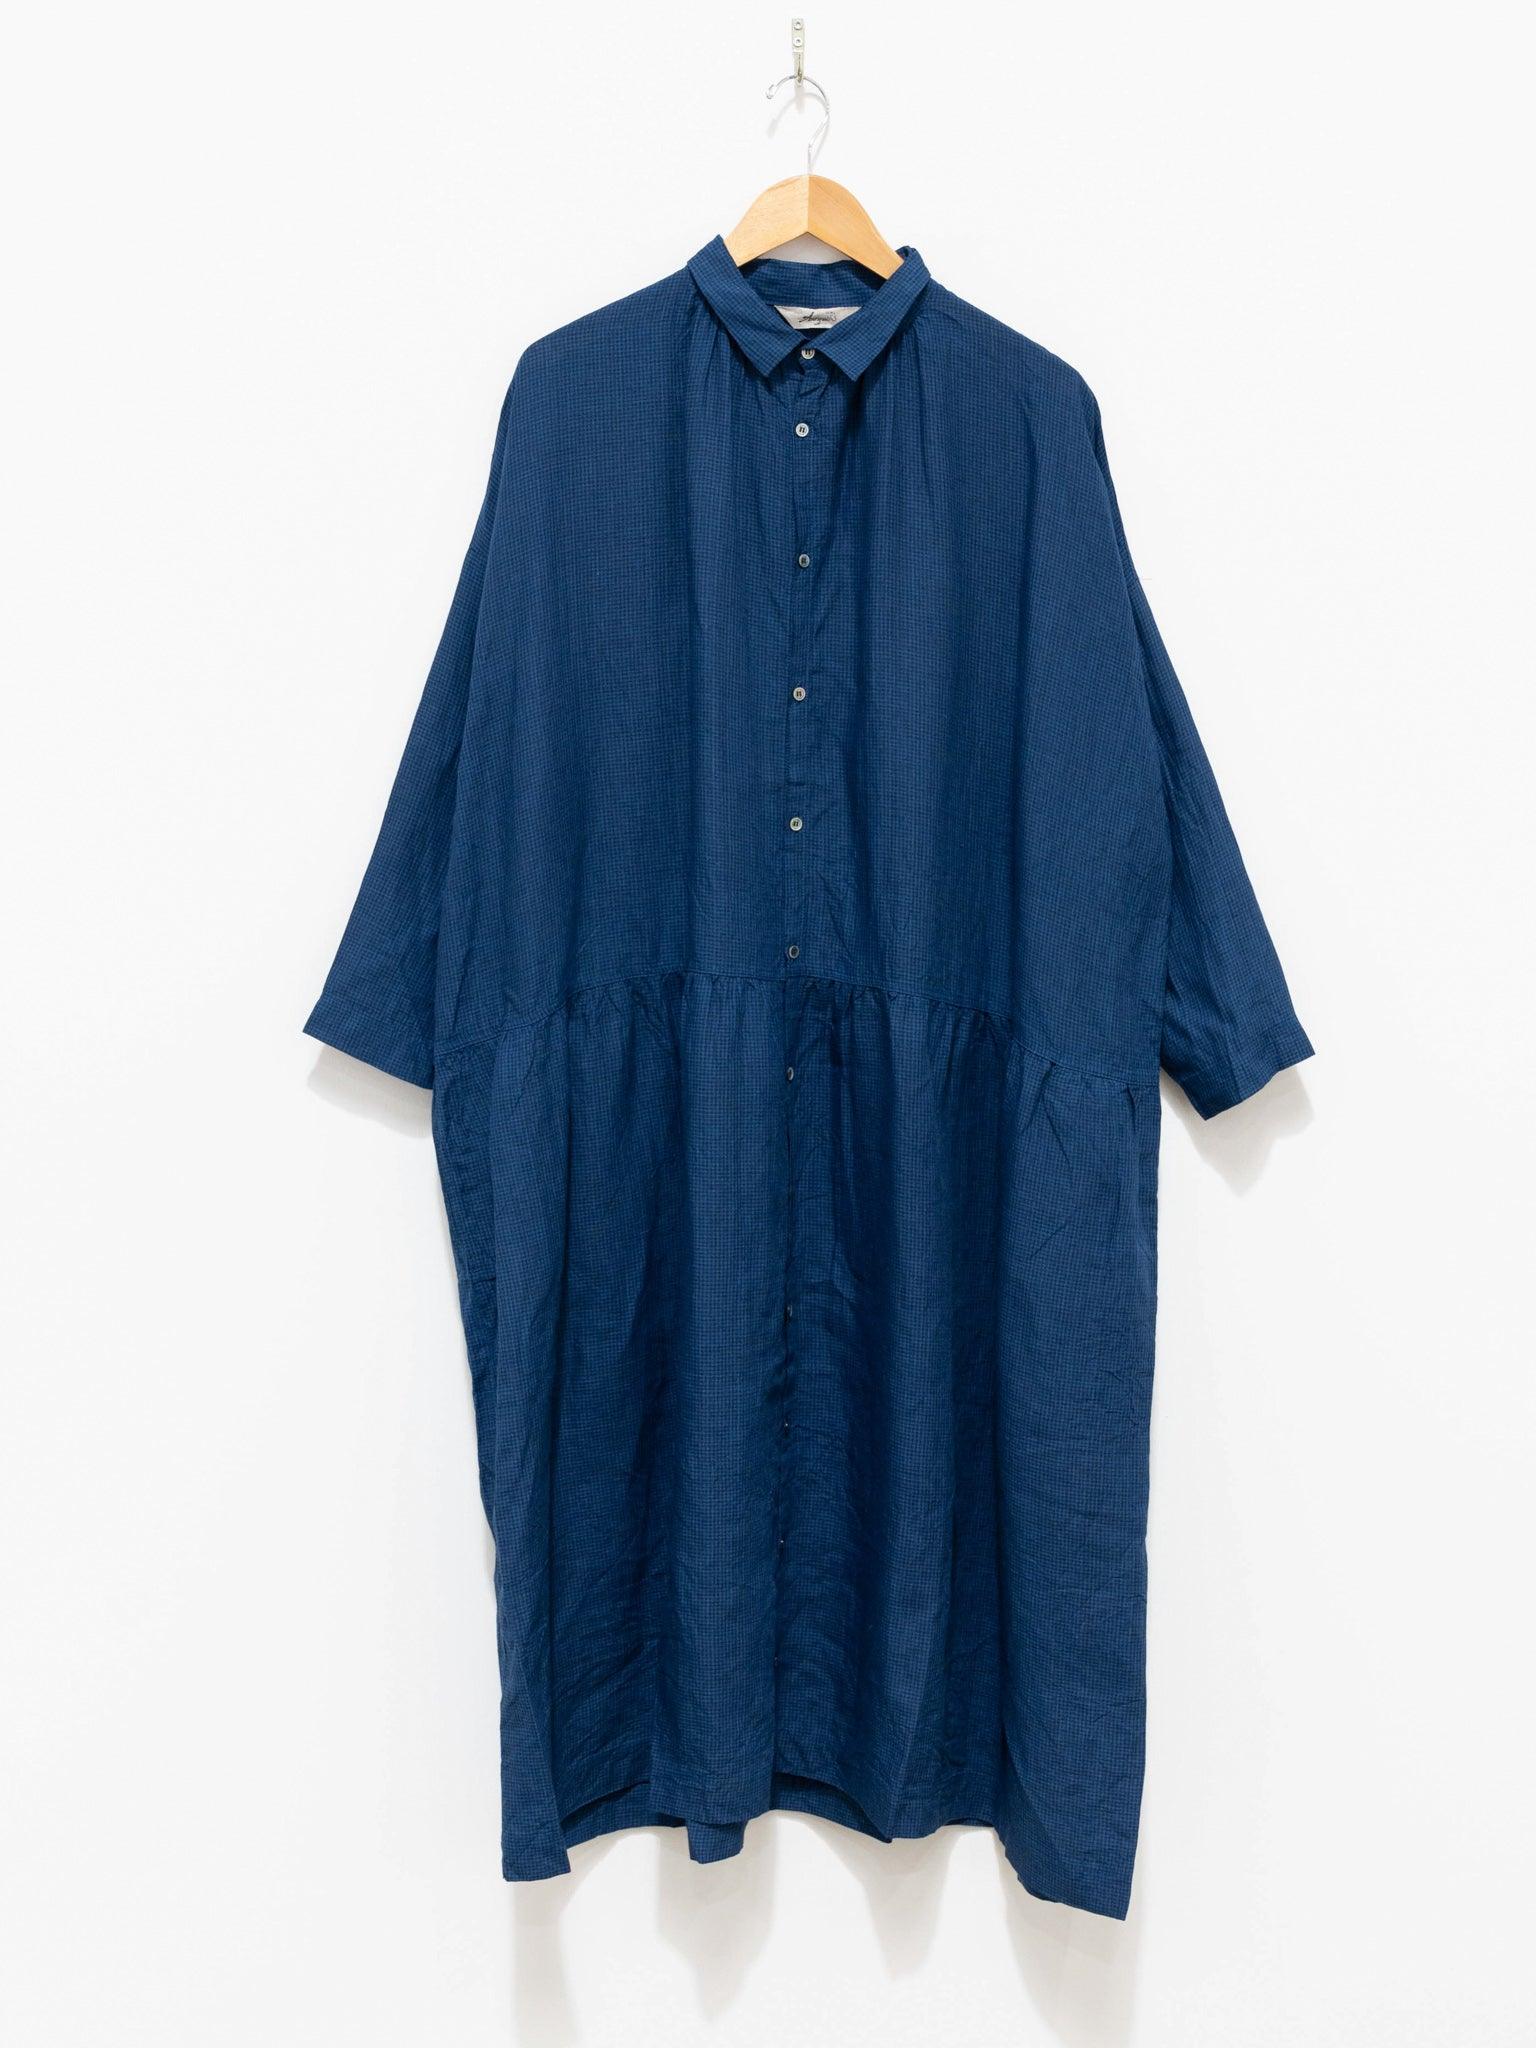 Namu Shop - Ichi Antiquites Linen Indigo Gingham Shirt Dress - Indigo x Blue